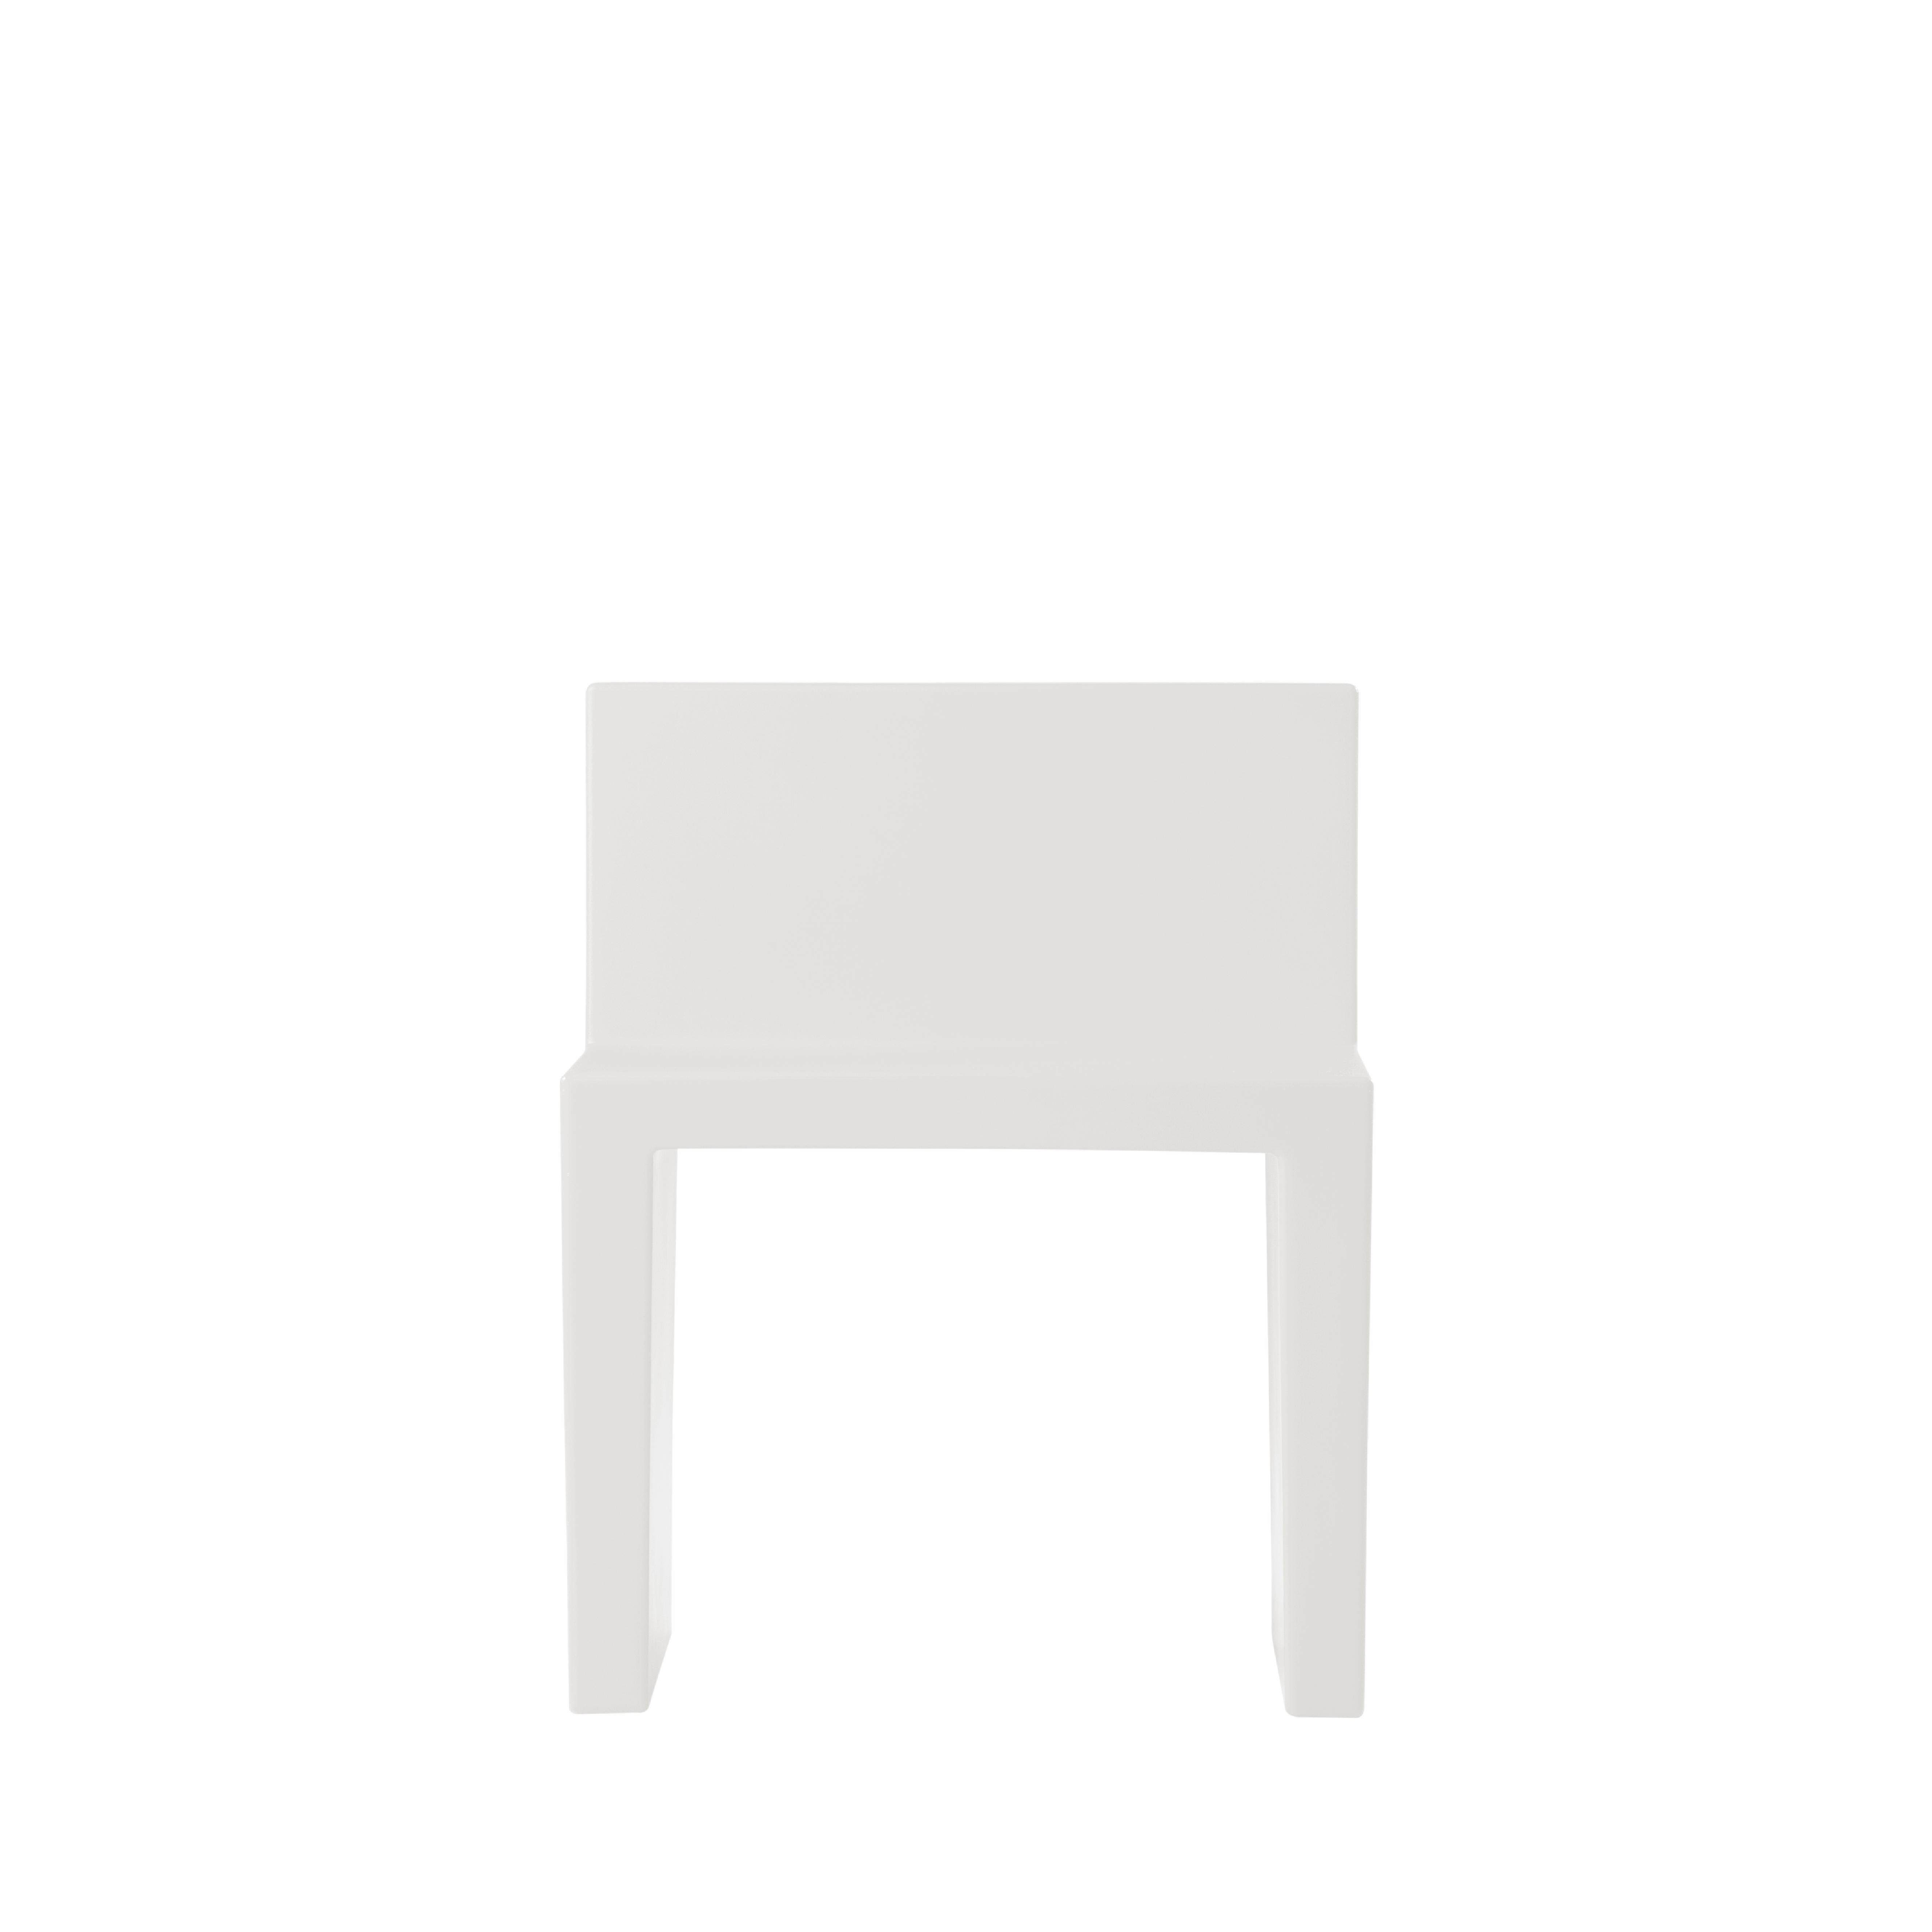 Italian Slide Design Angolo Retto Kids Chair in Milky White by Slide Studio For Sale